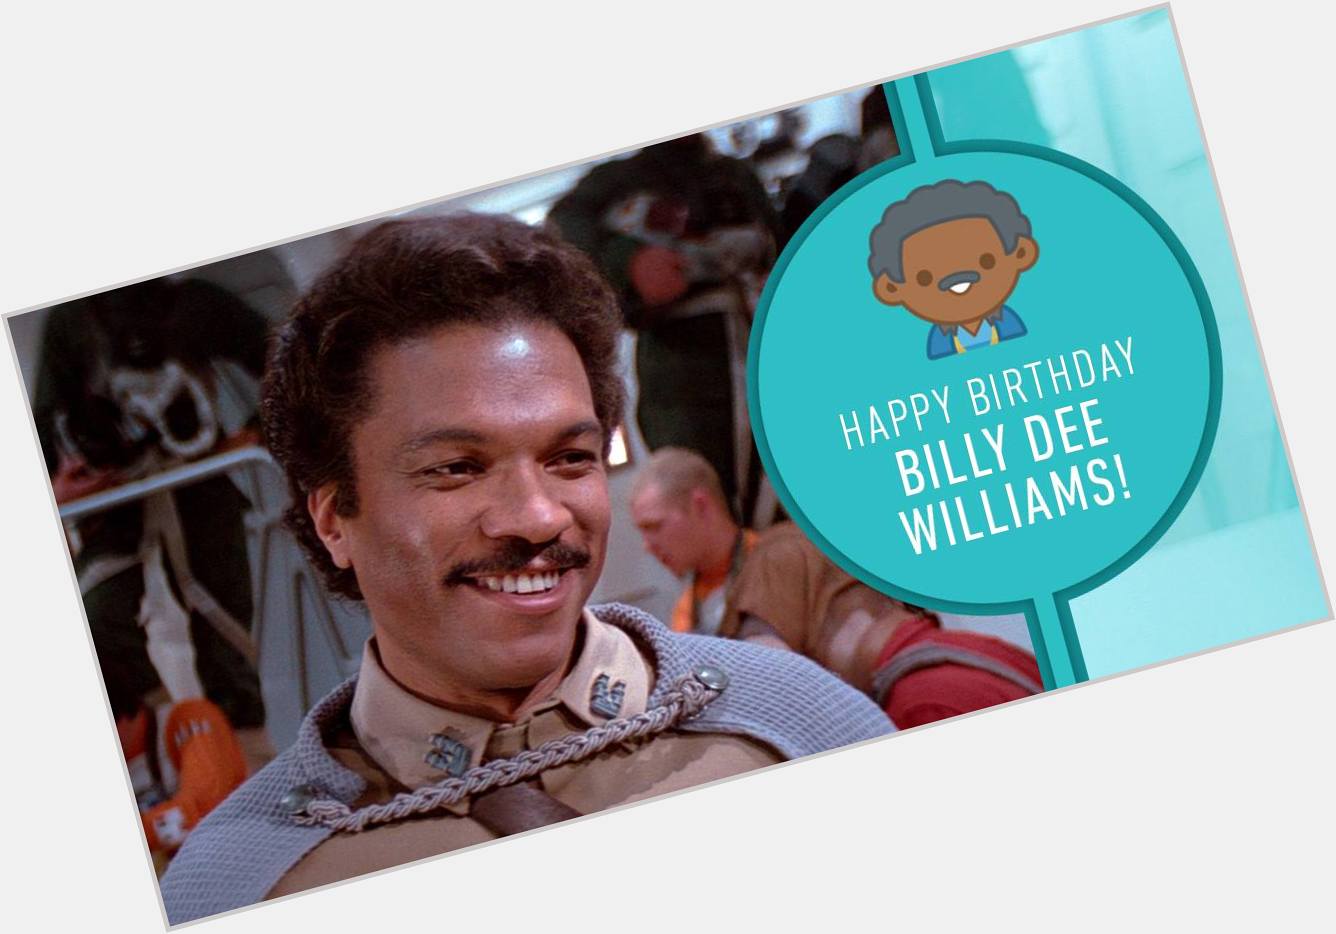 Happy Birthday Billy Dee Williams!  